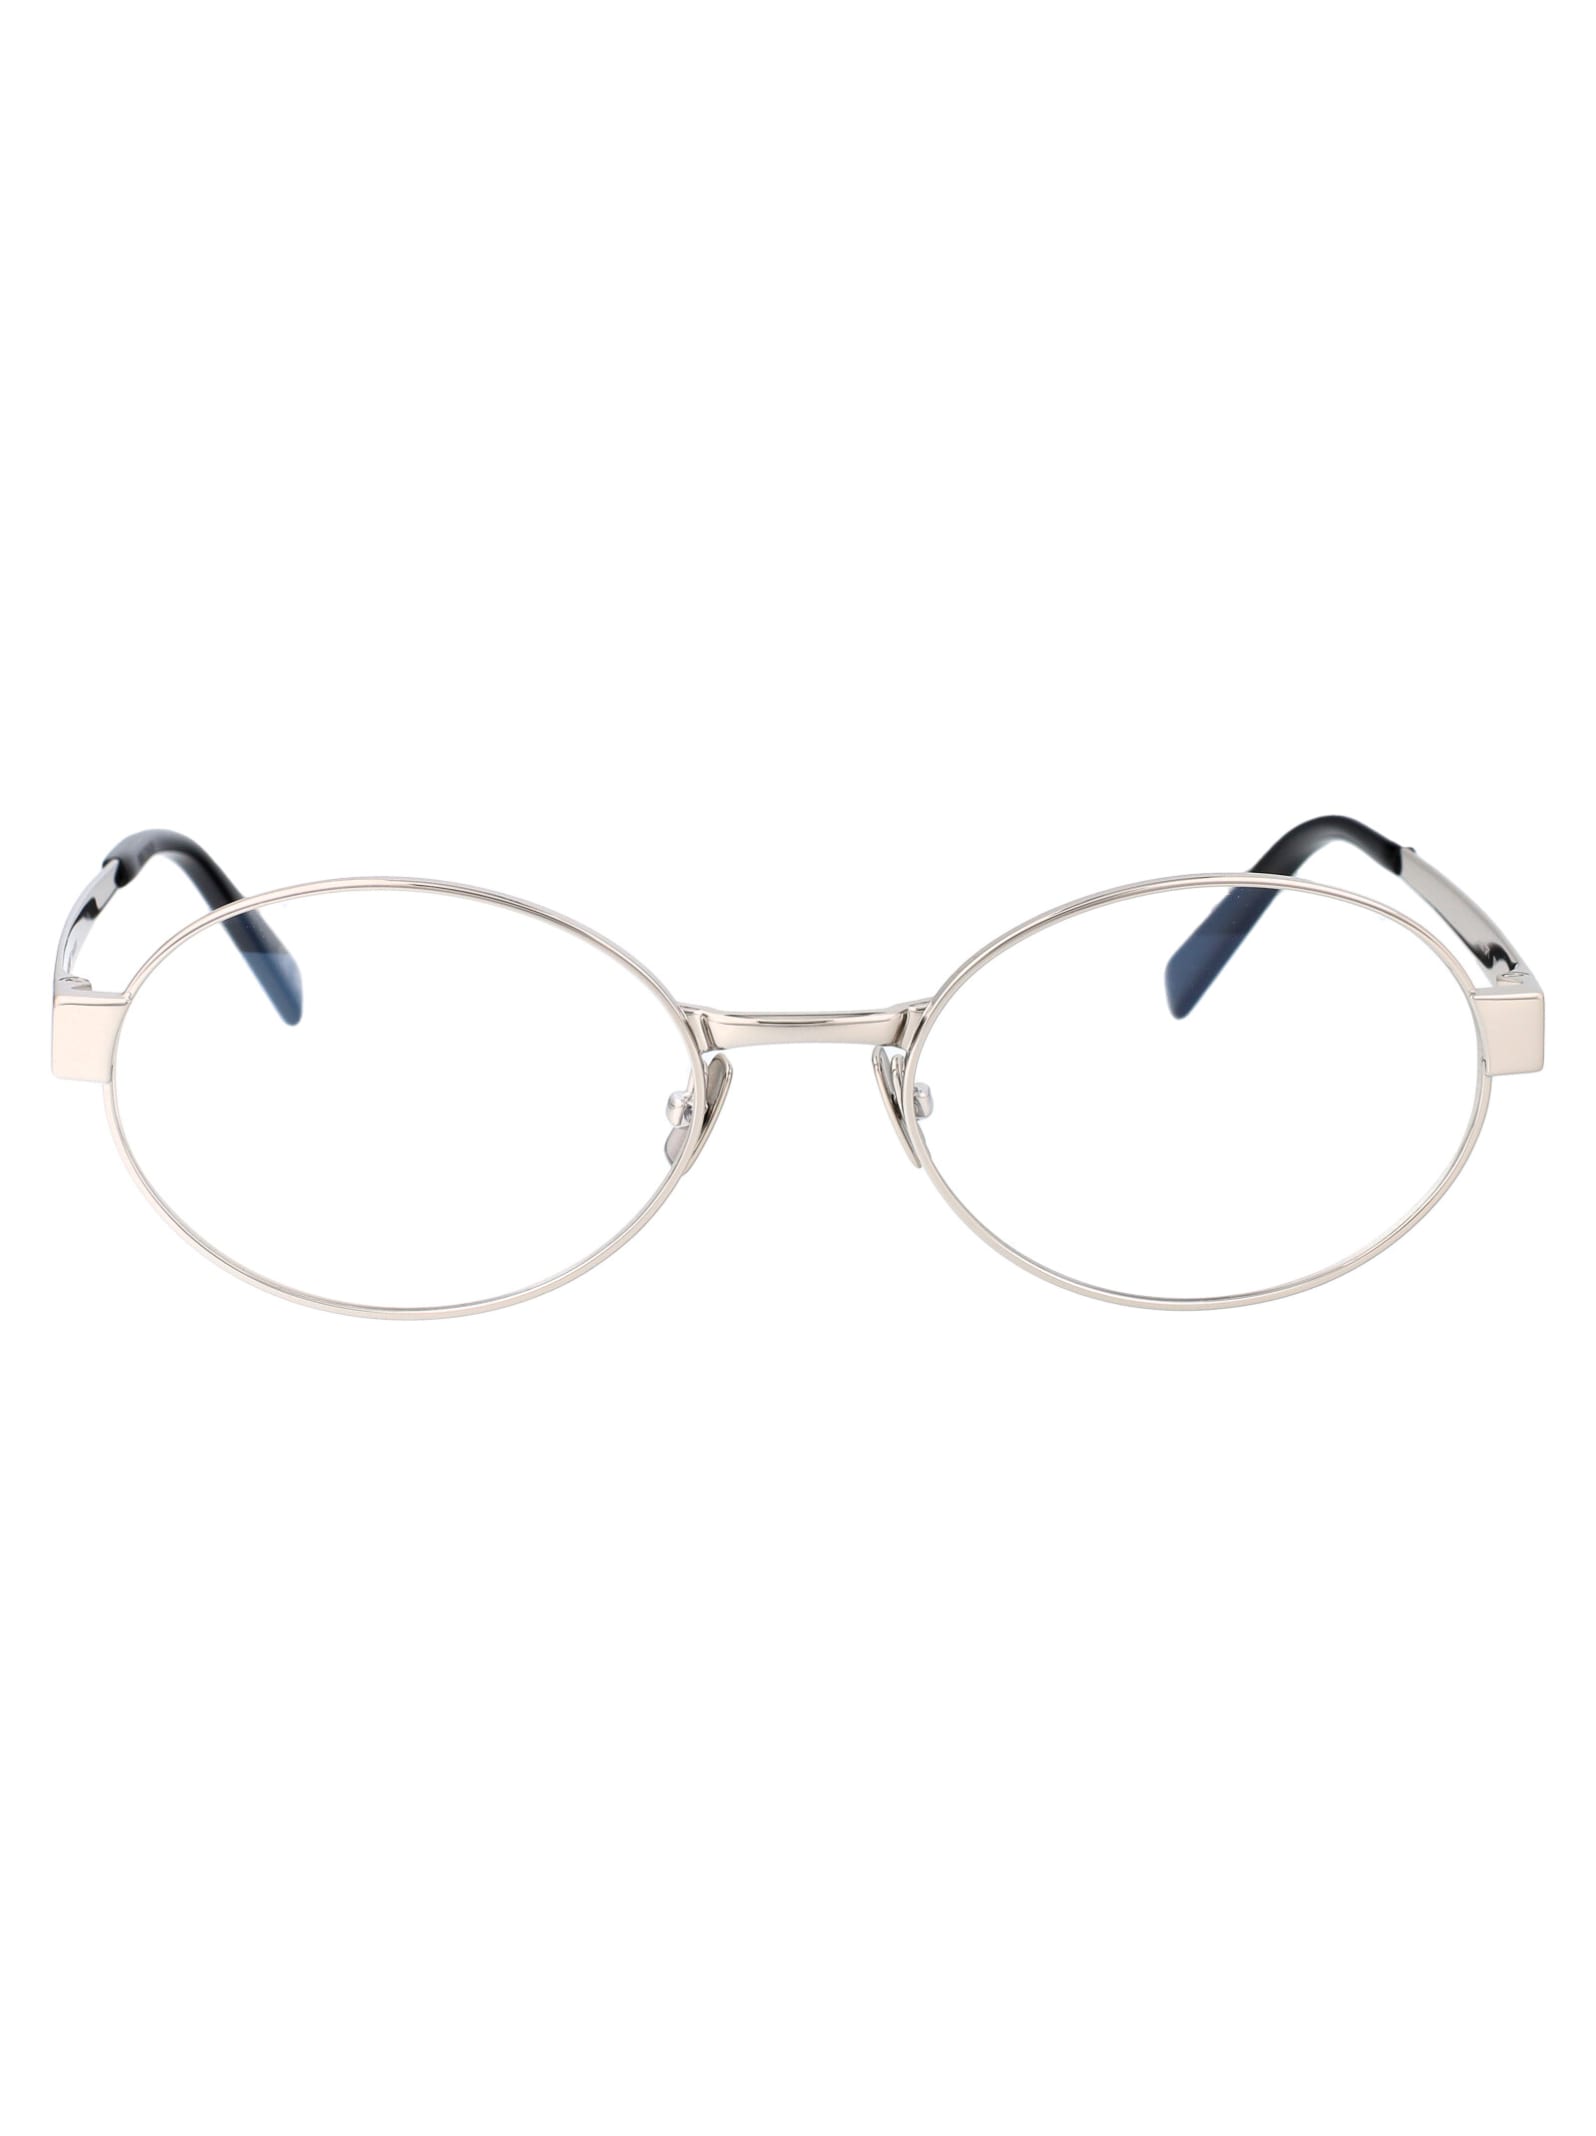 Sl 692 Opt Glasses